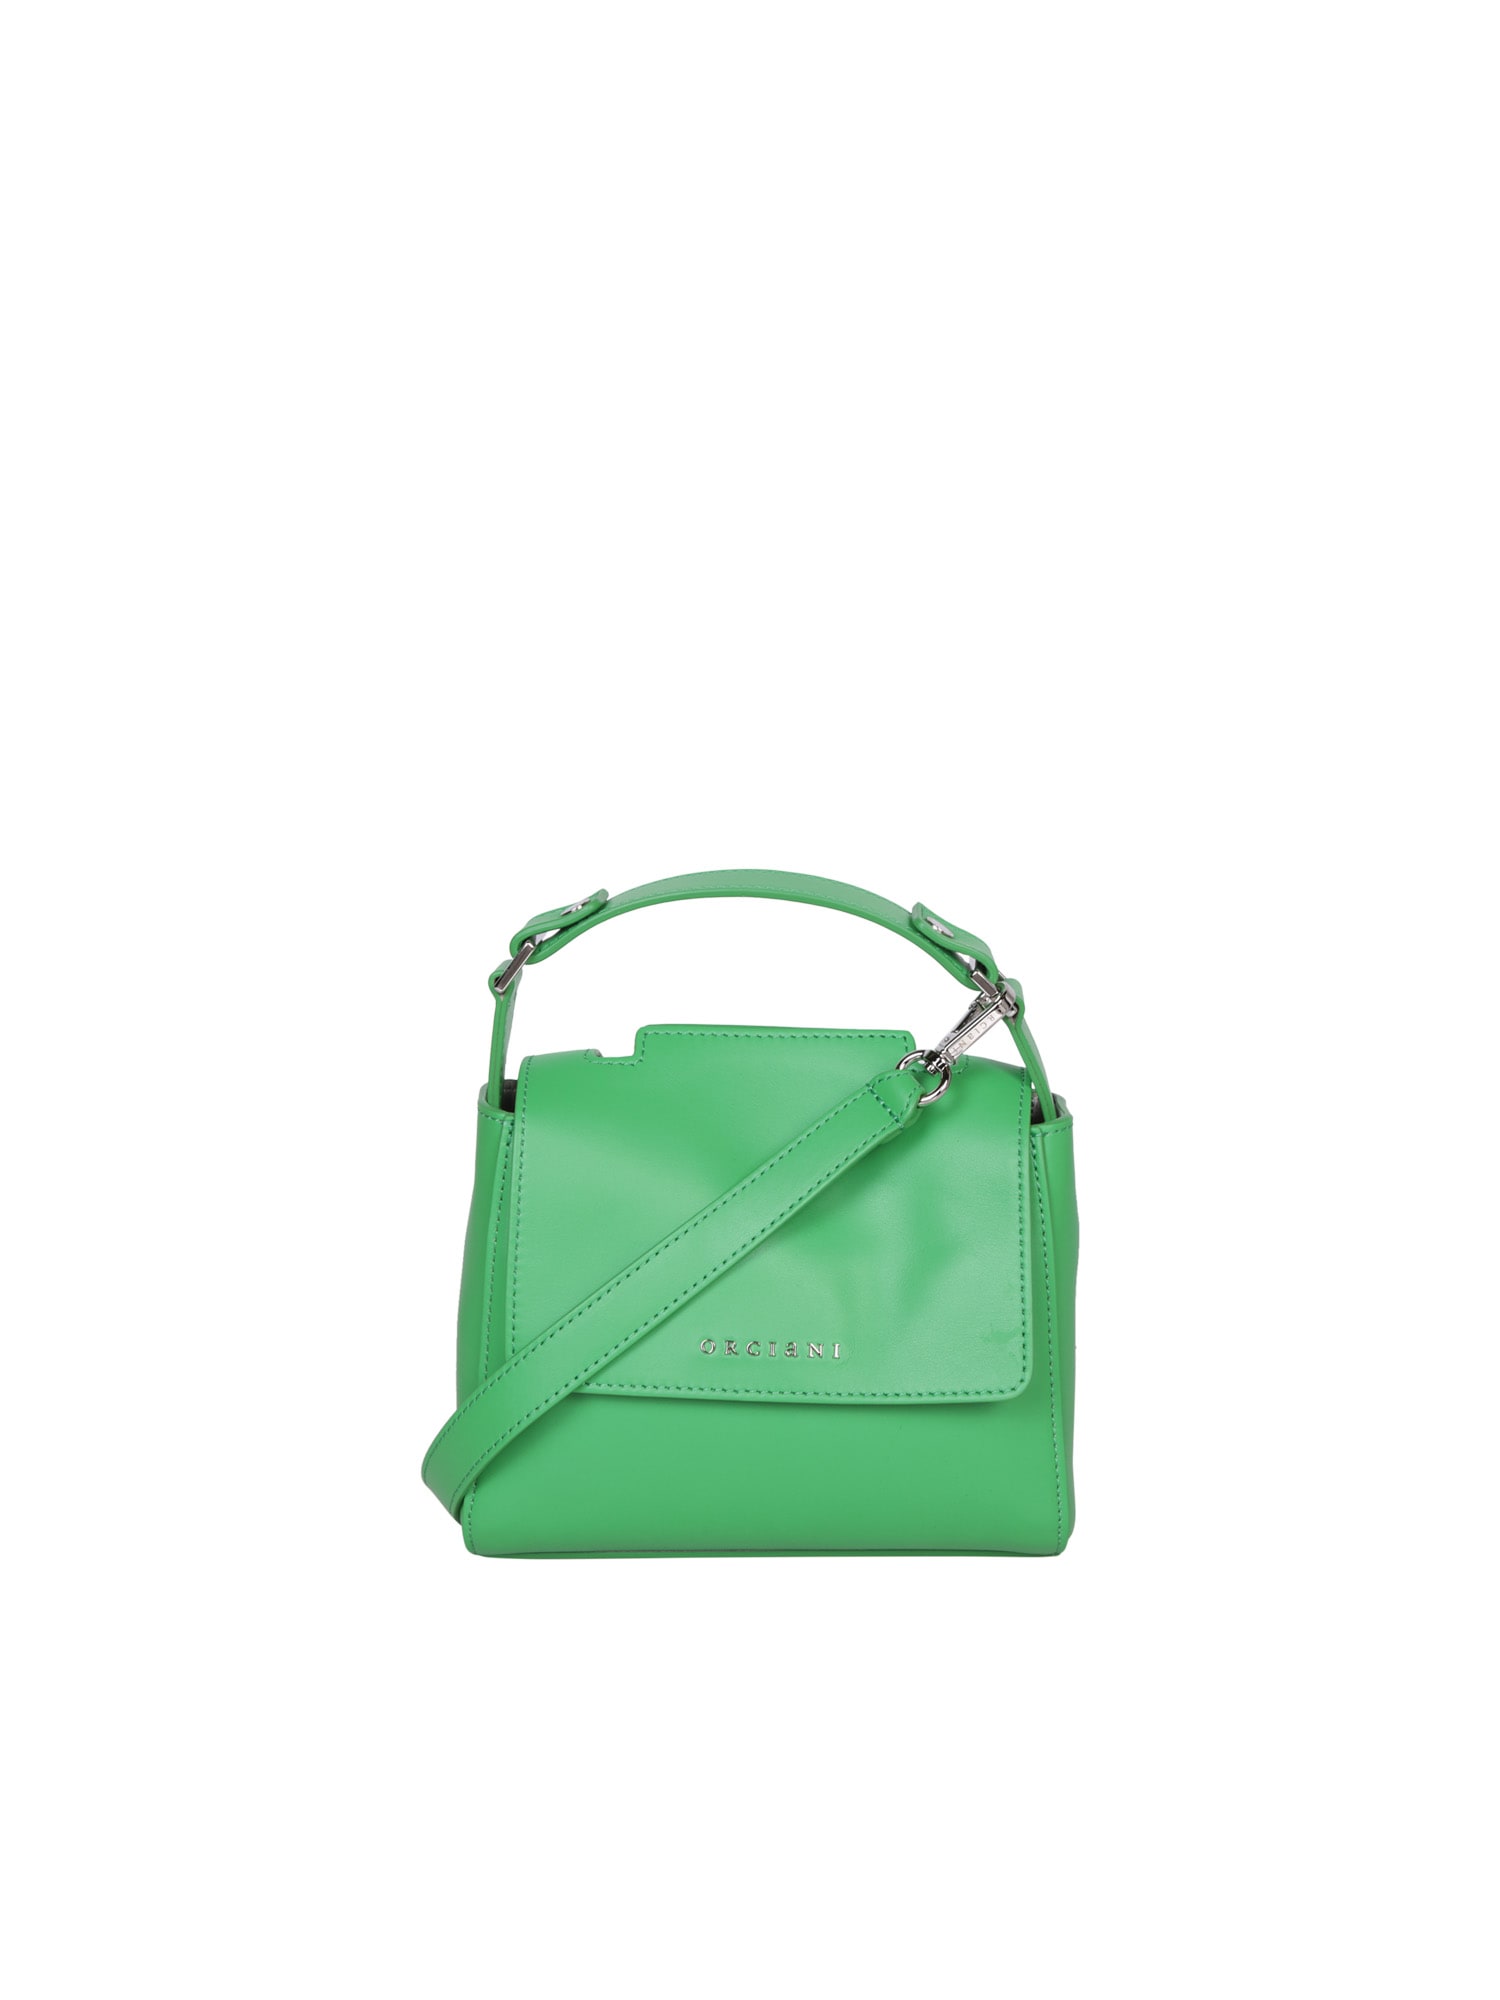 Sveva Liberty Mini Green Bag